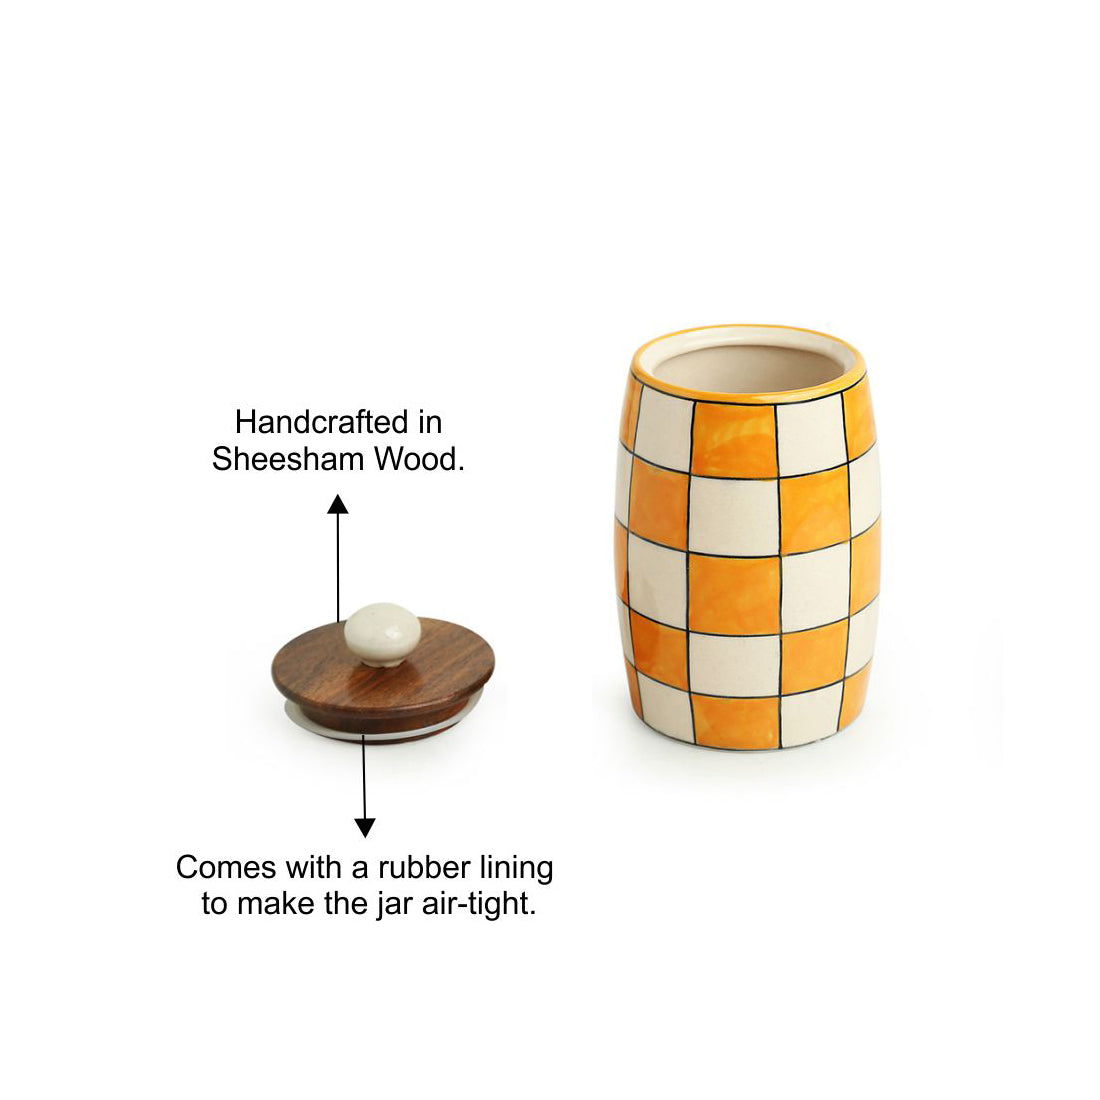 'Shatranj Checkered' Handpainted Multi-Purpose Storage Jar & Container in Ceramic (Airtight, 600 ML, 6.1 Inch)